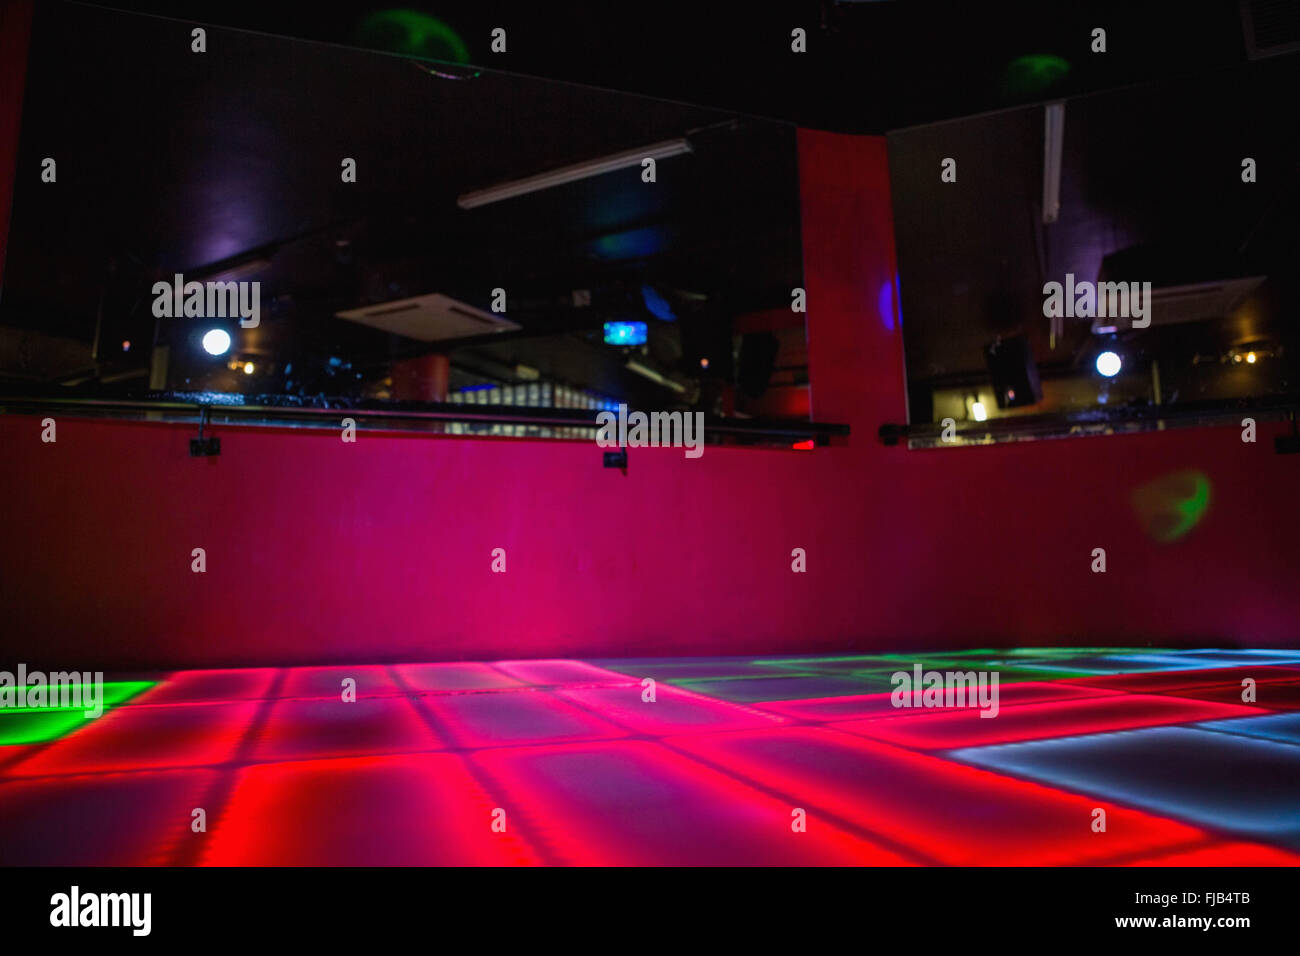 Red illuminated disco dance floor Stock Photo